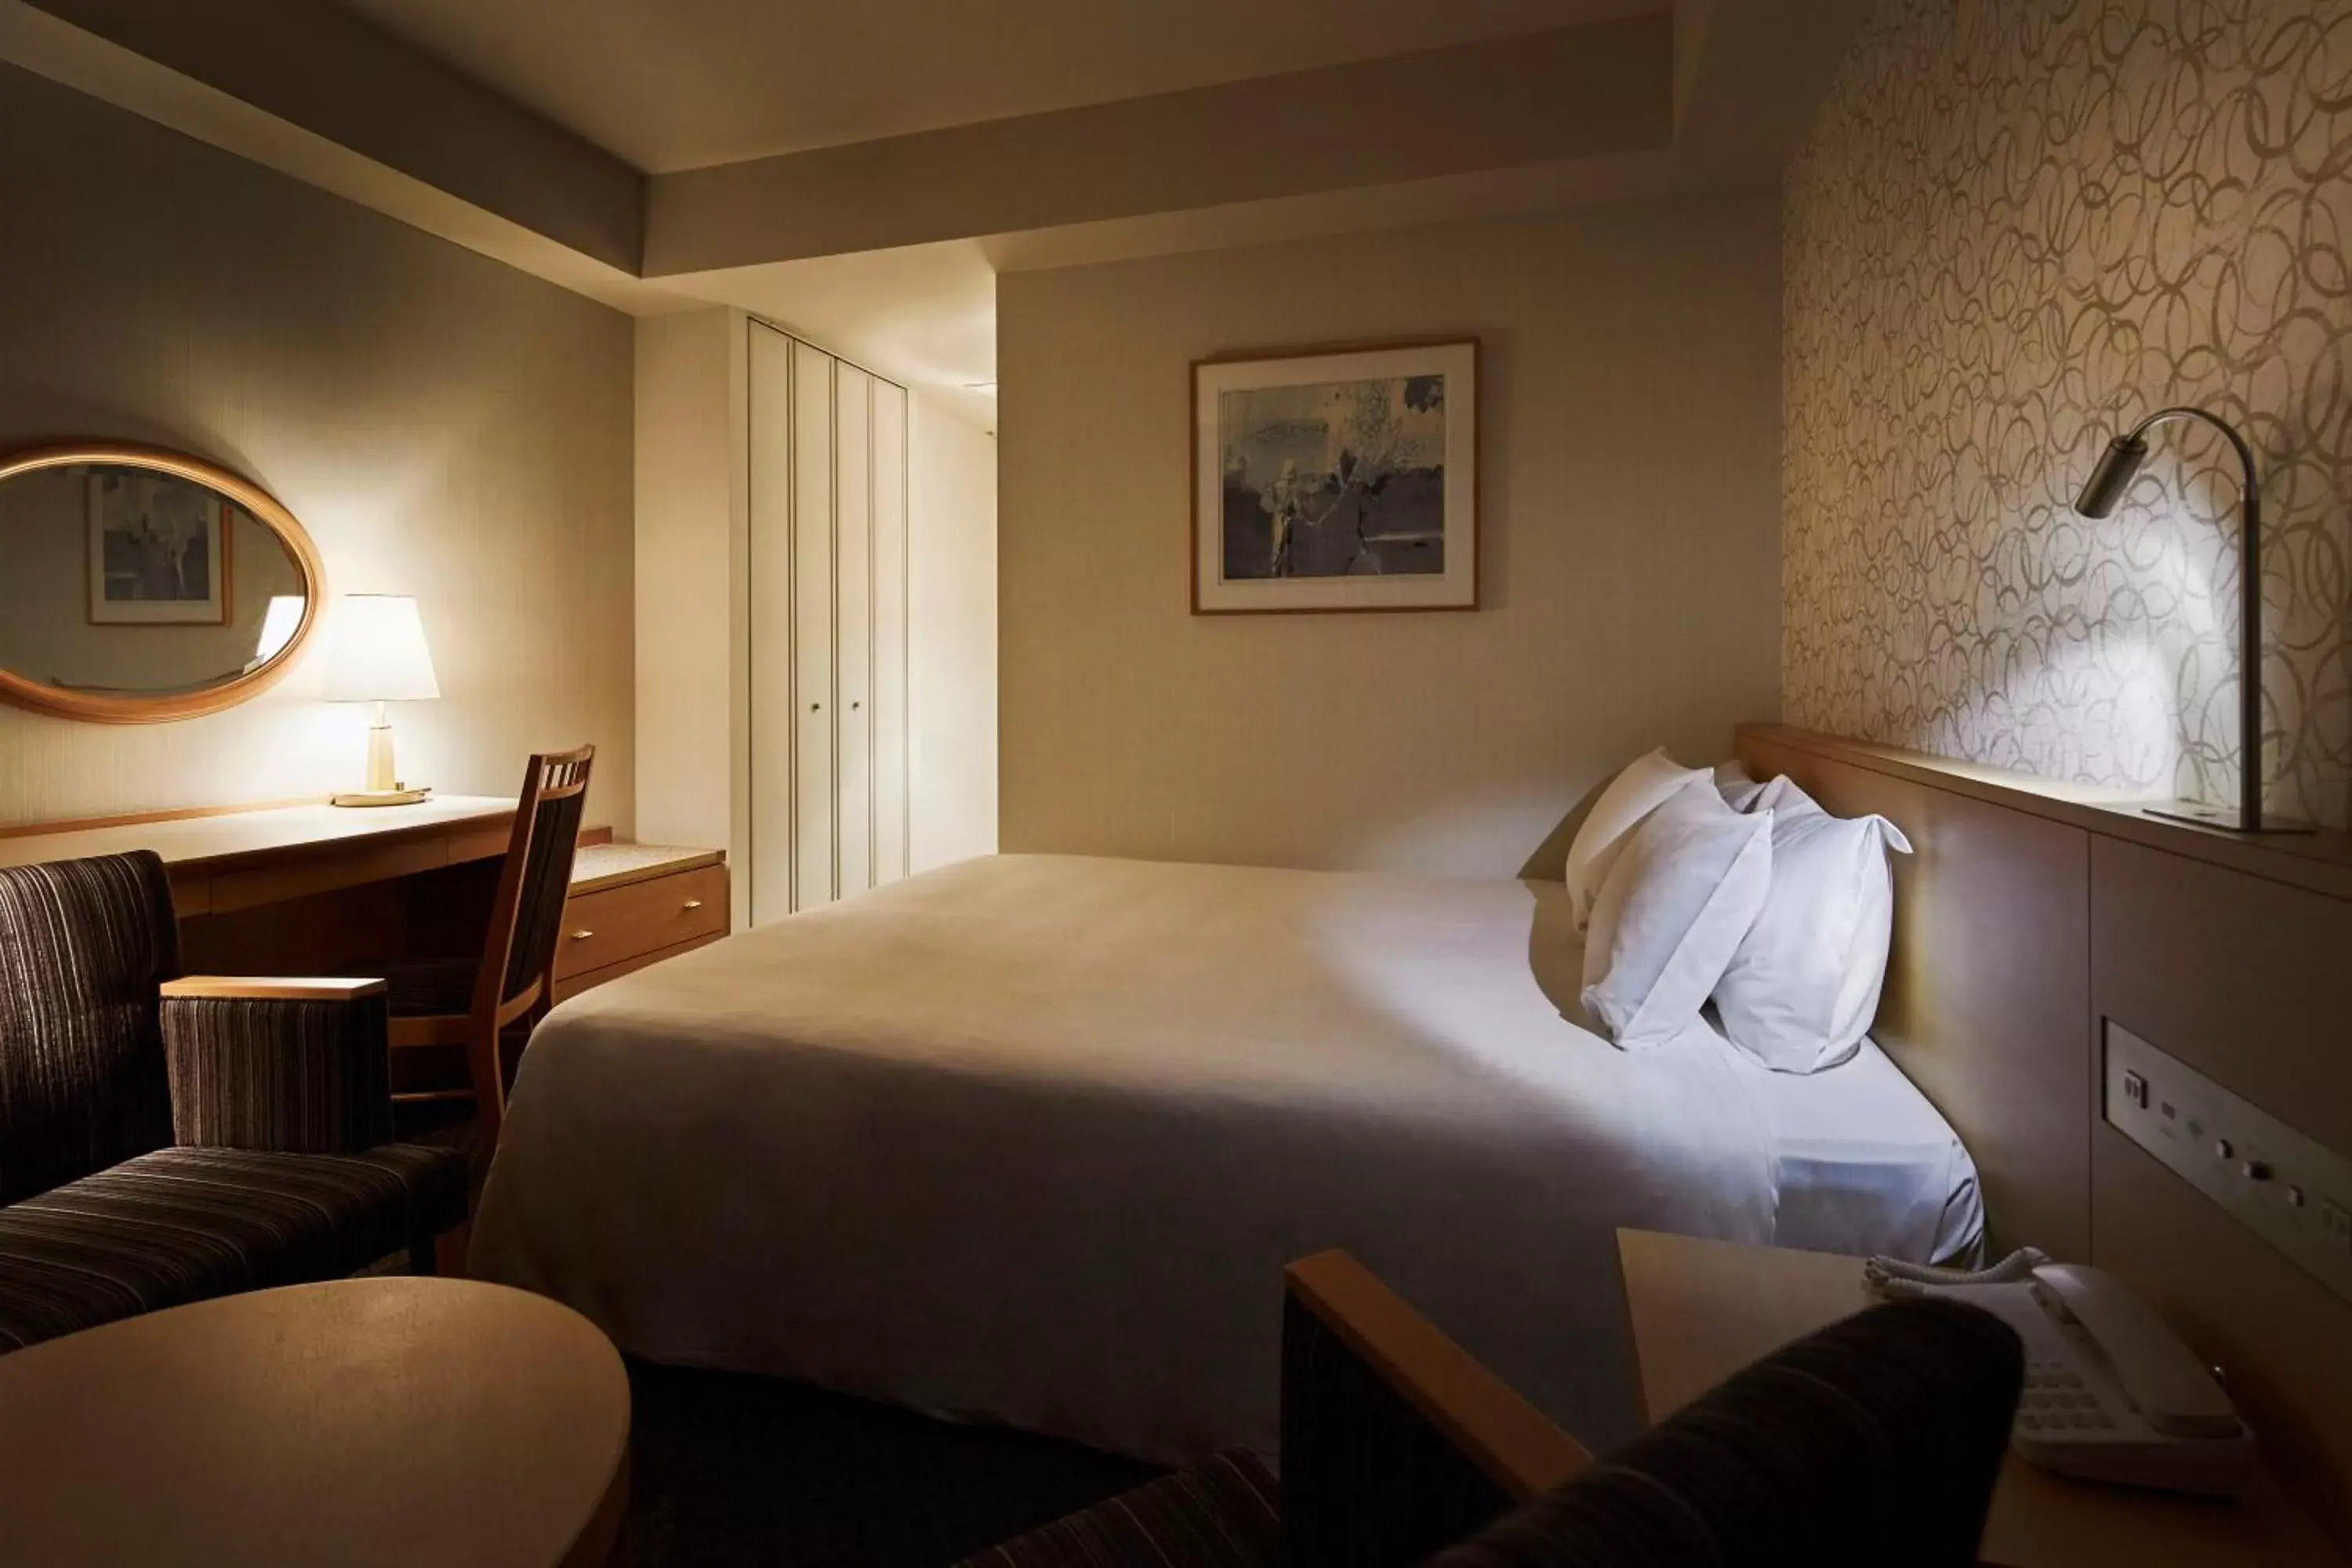 Bed, Room Photo in Tobu Hotel Levant Tokyo